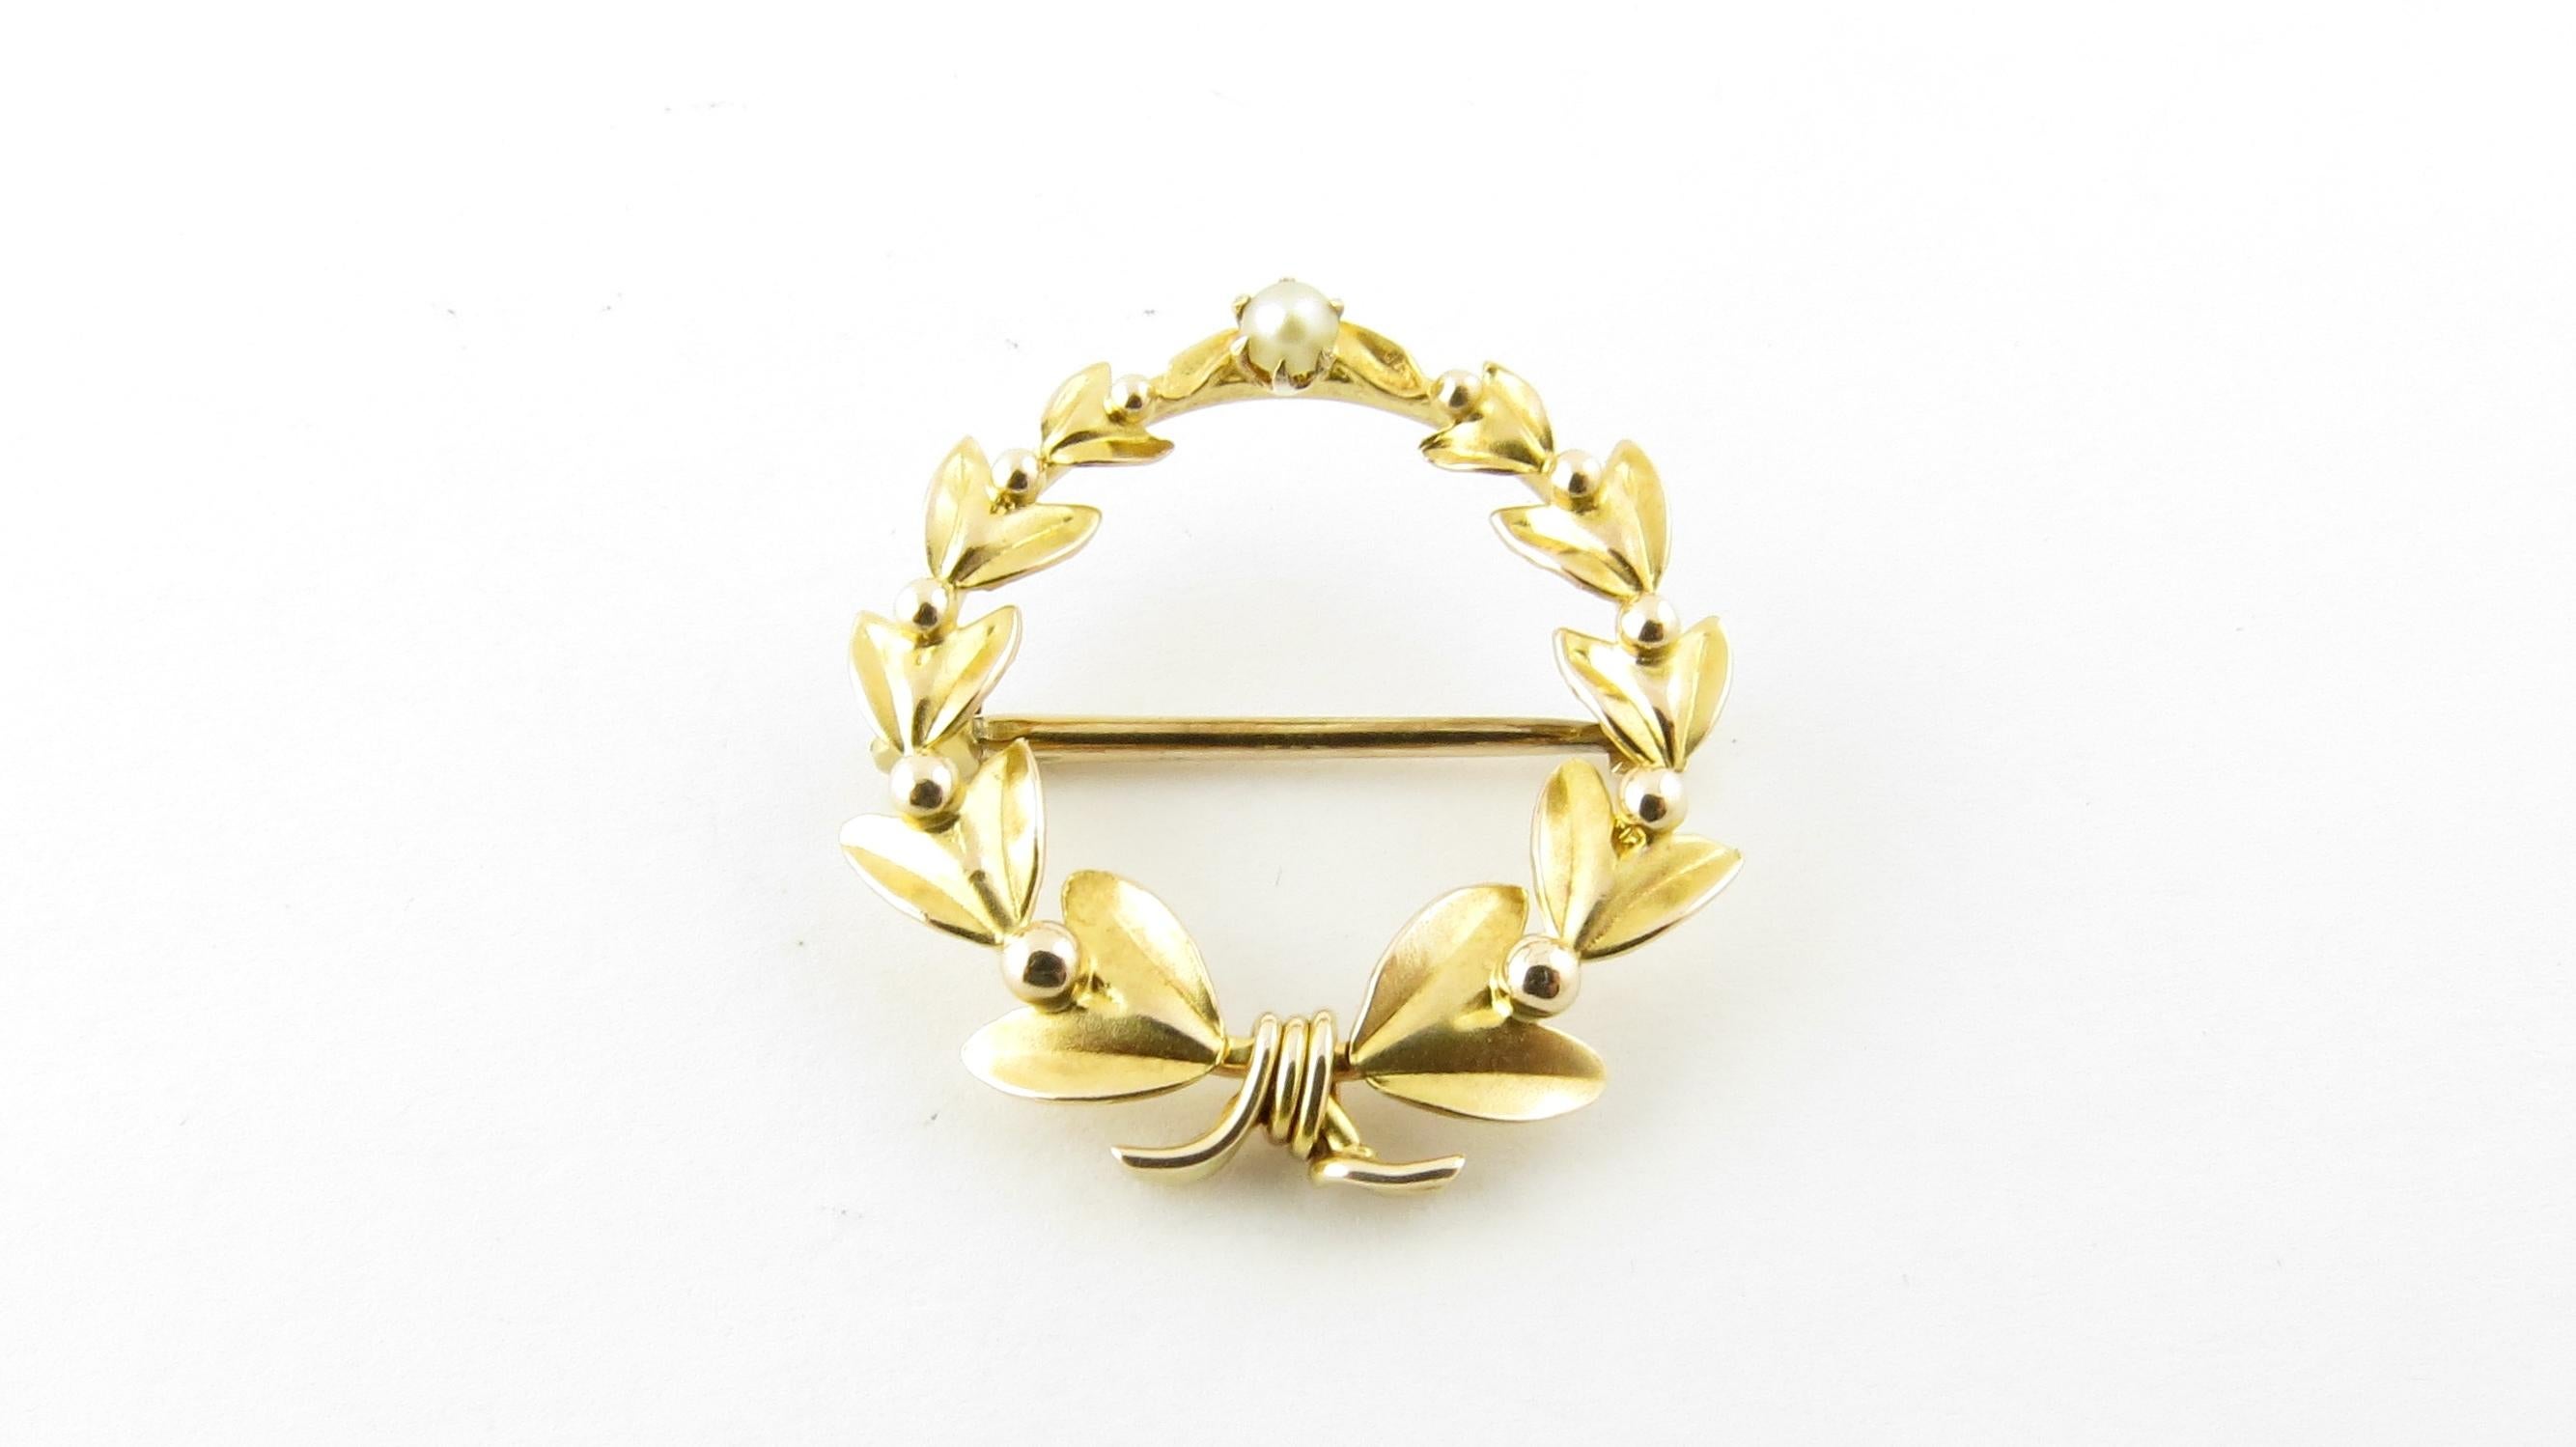 10 Karat Yellow Gold Wreath Pin or Brooch 2